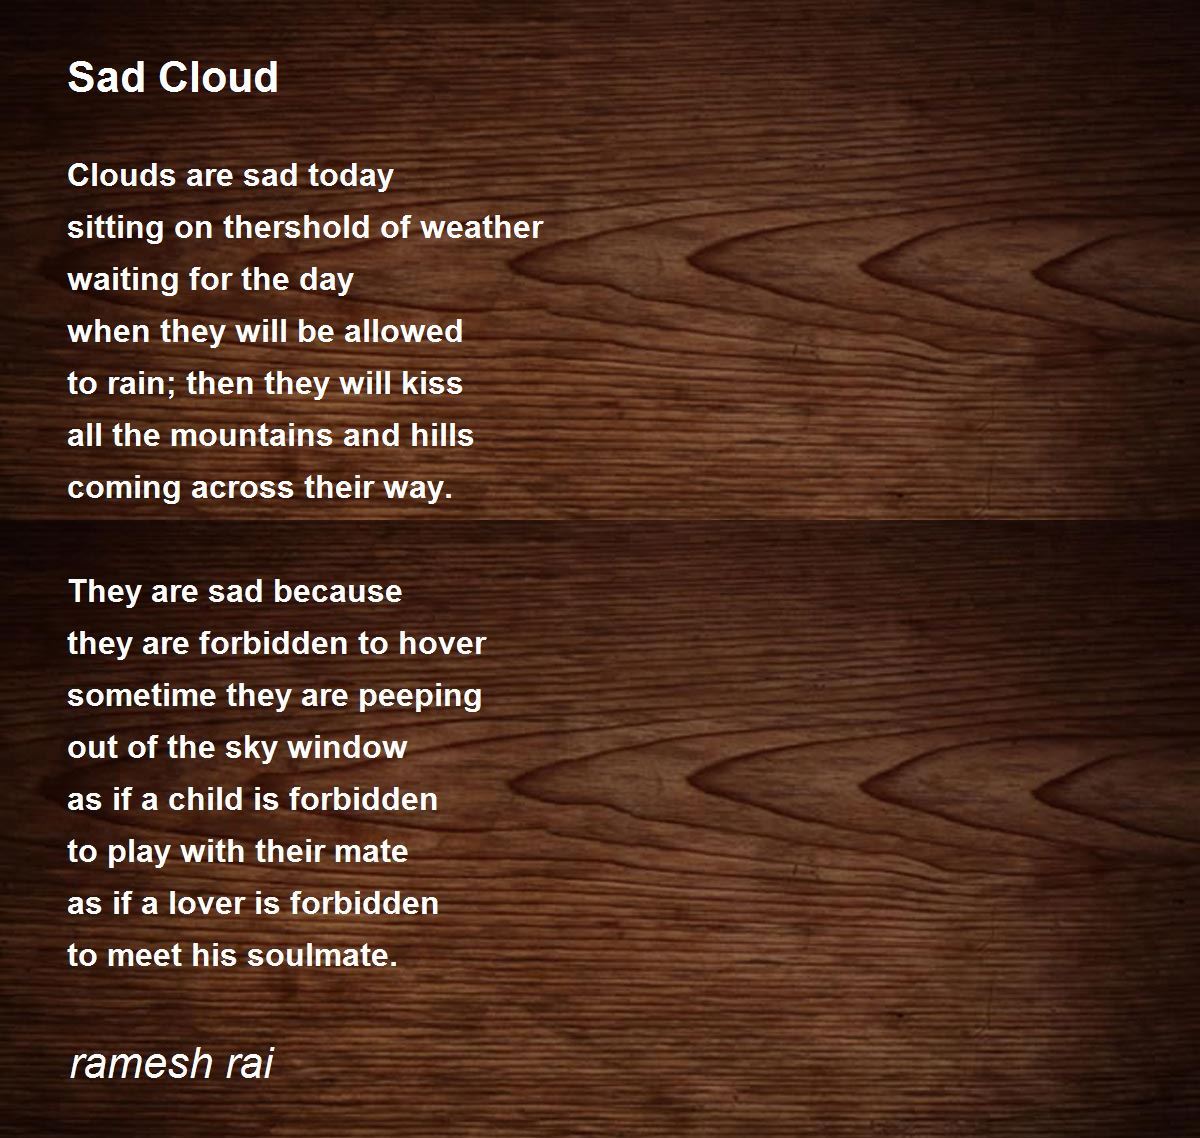 Sad Cloud - Sad Cloud Poem by ramesh rai